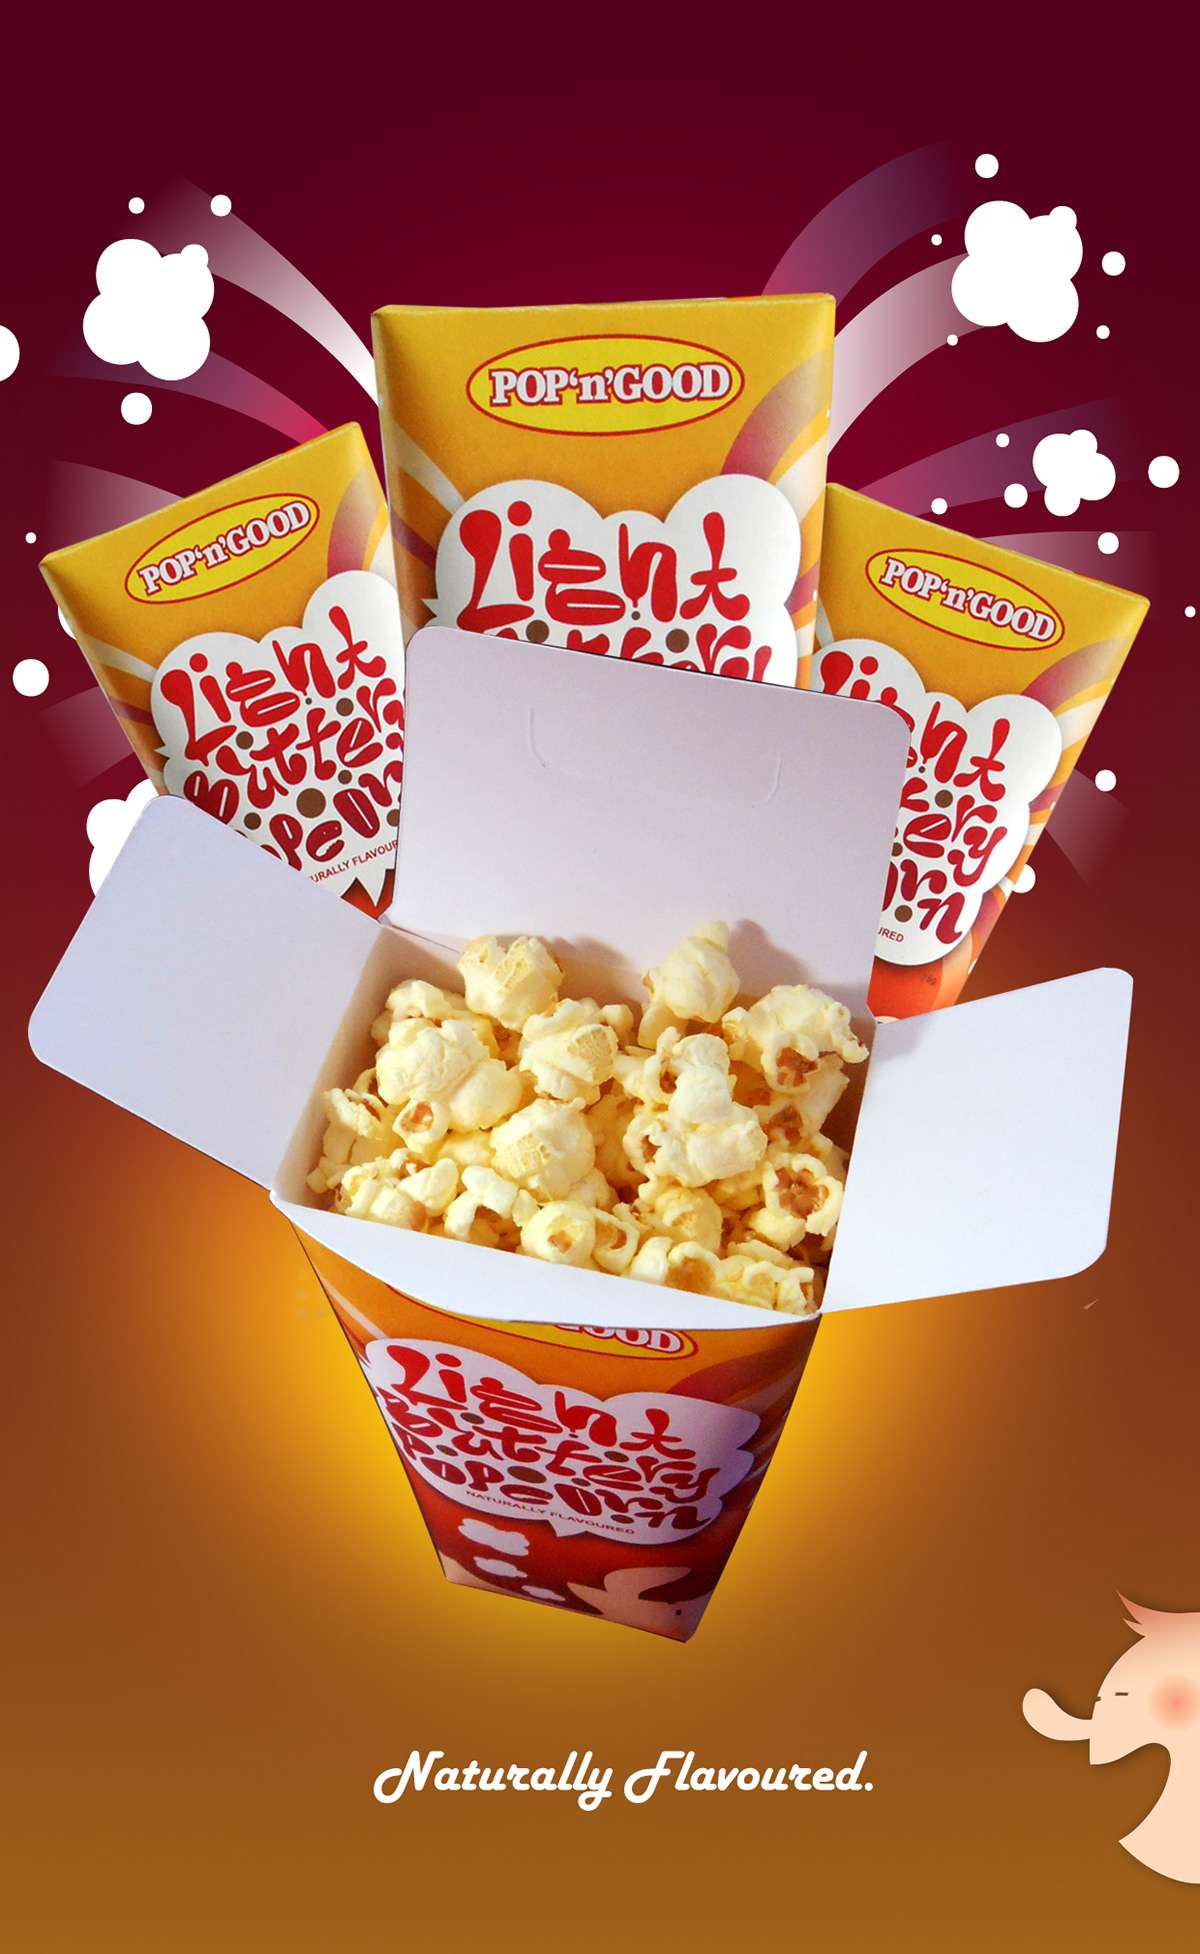 popcorn popngood kura Hashin light butter FMCG